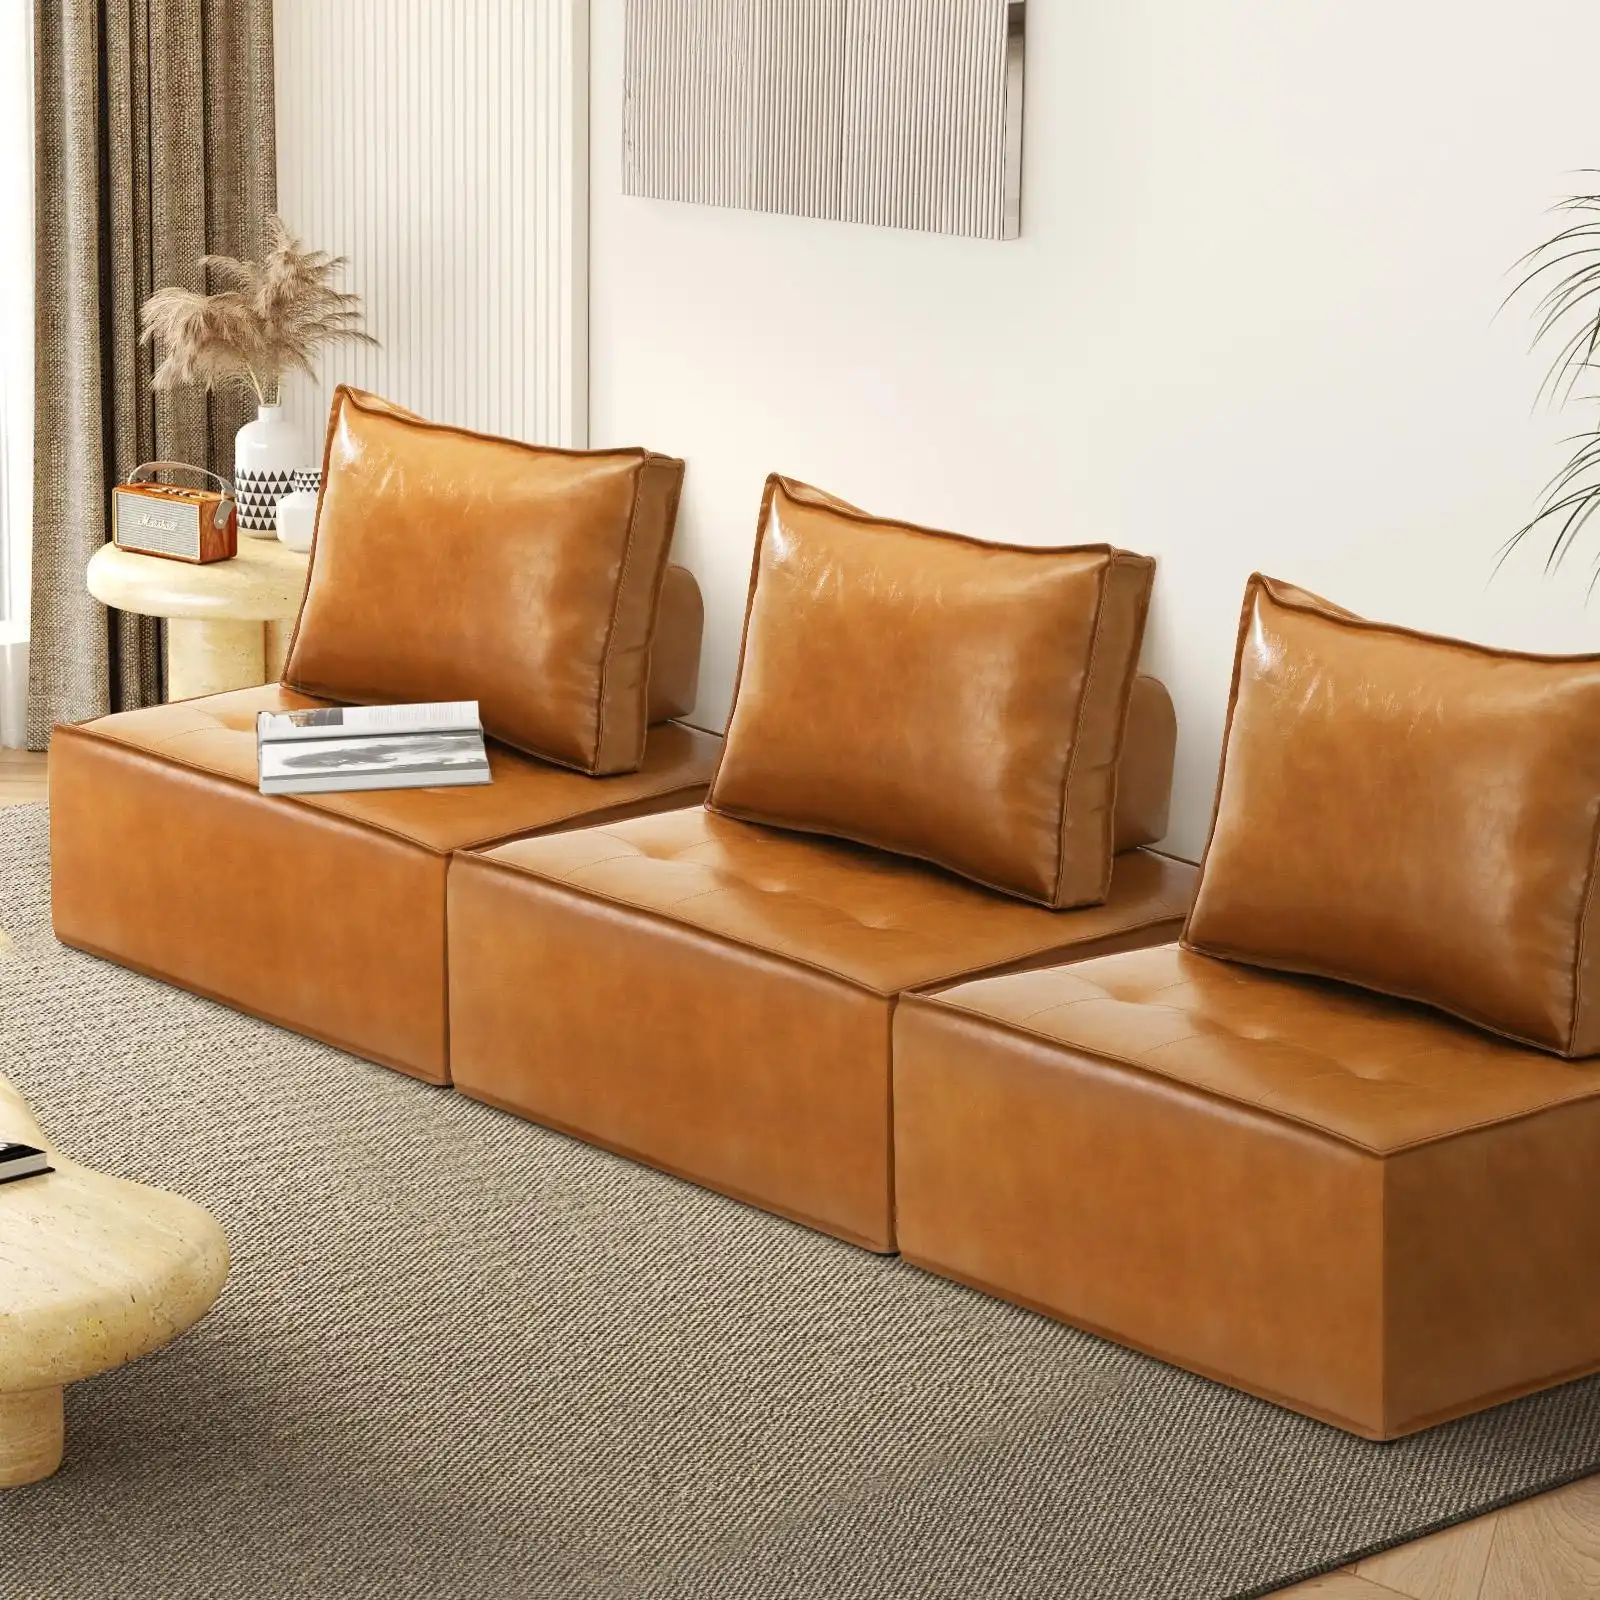 Oikiture 3PC Modular Sofa Lounge Chair Armless TOFU Back PU Leather Brown